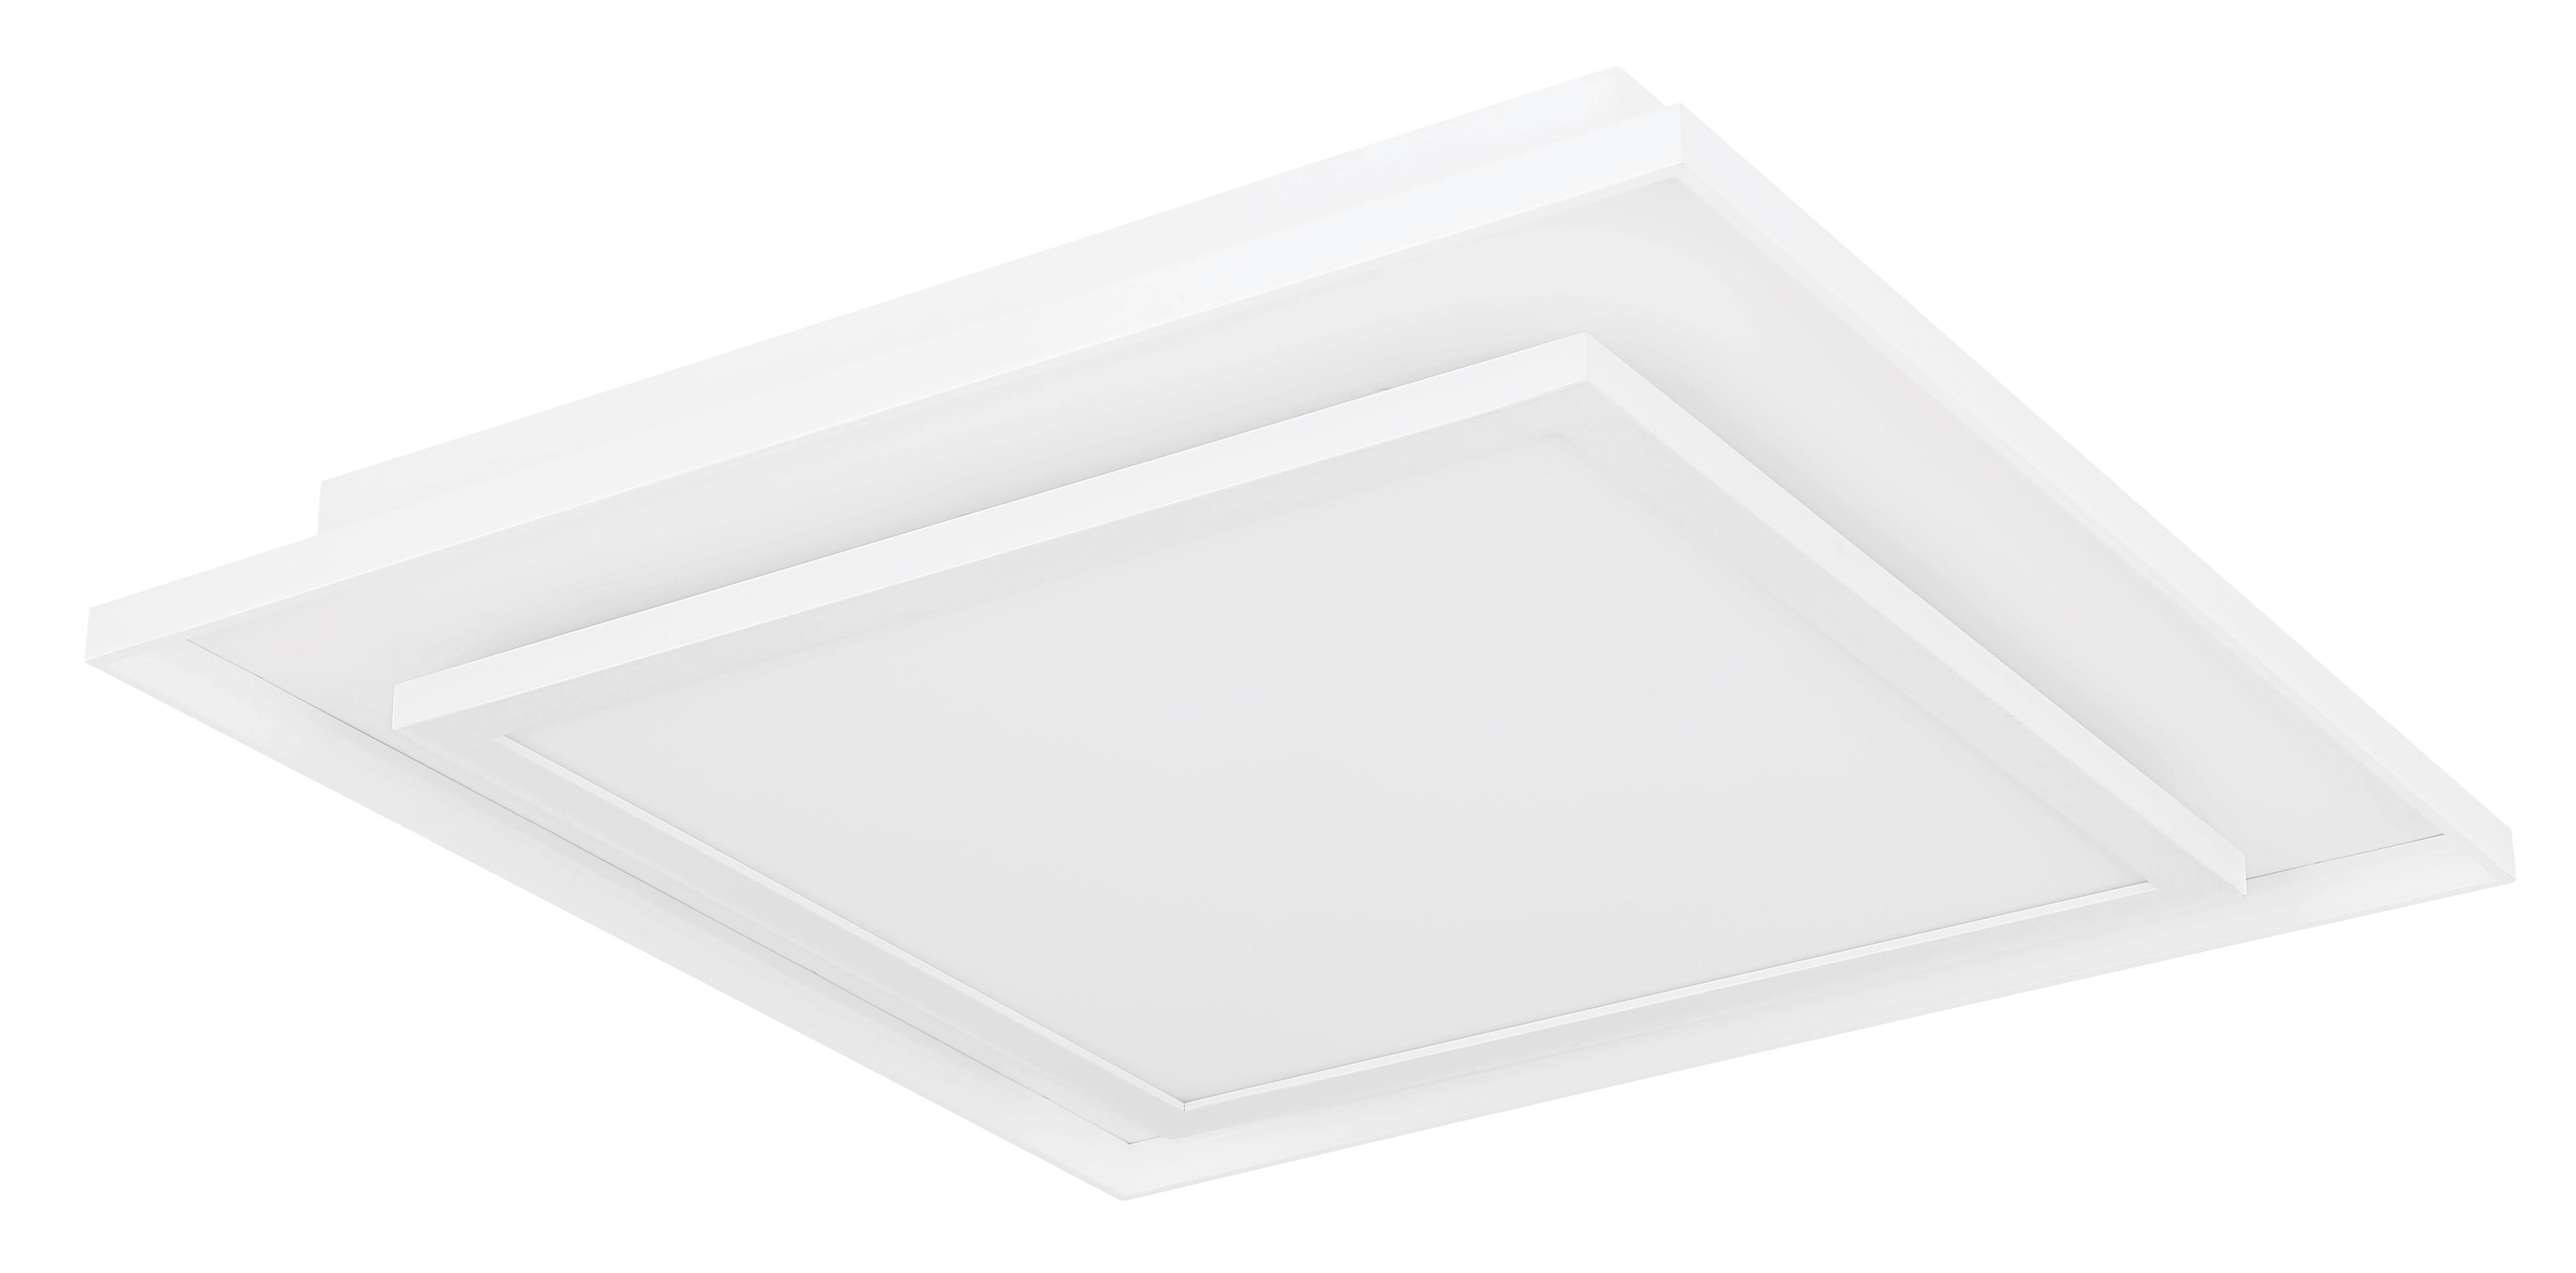 LED-DECKENLEUCHTE 44,3/44,3/6,3 cm   - Weiß, Design, Kunststoff/Metall (44,3/44,3/6,3cm) - Globo